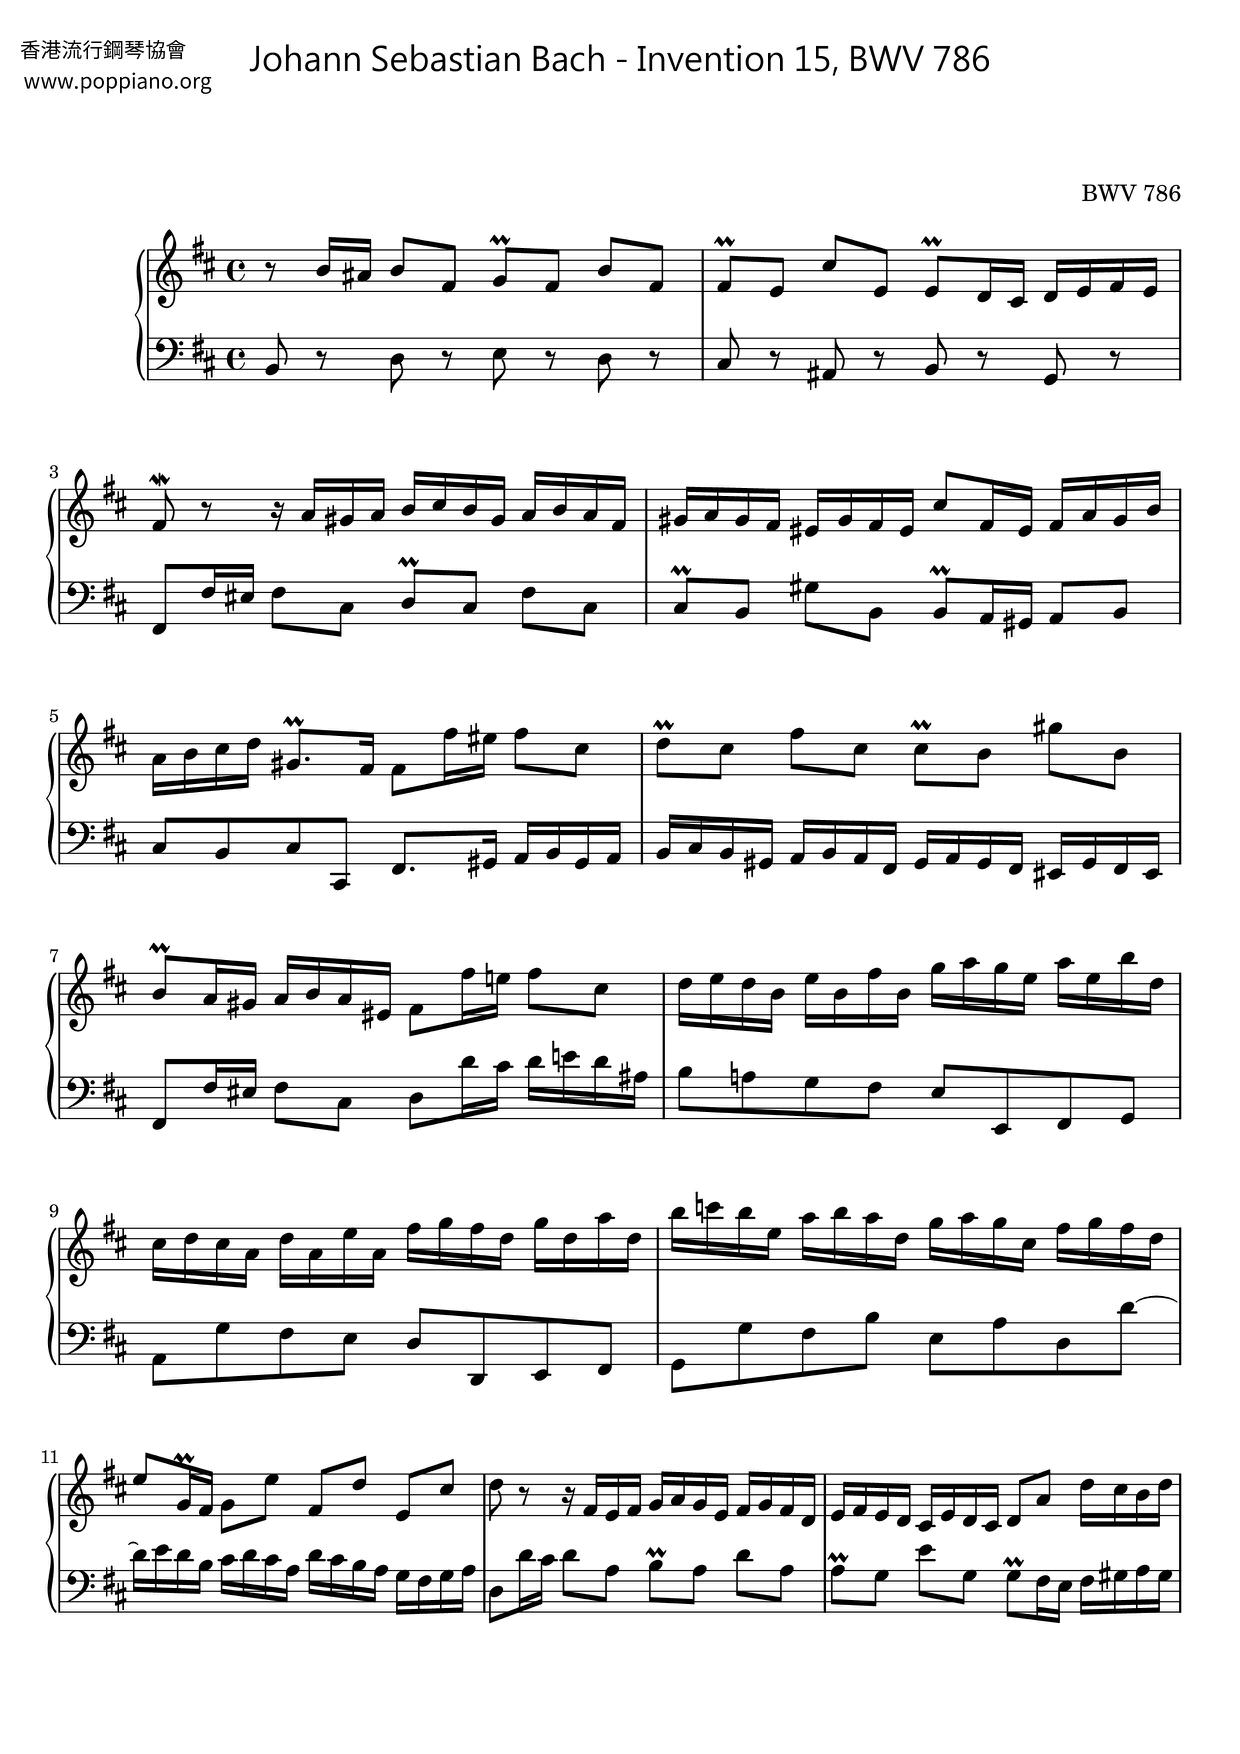 Invention 15, BWV 786 Score